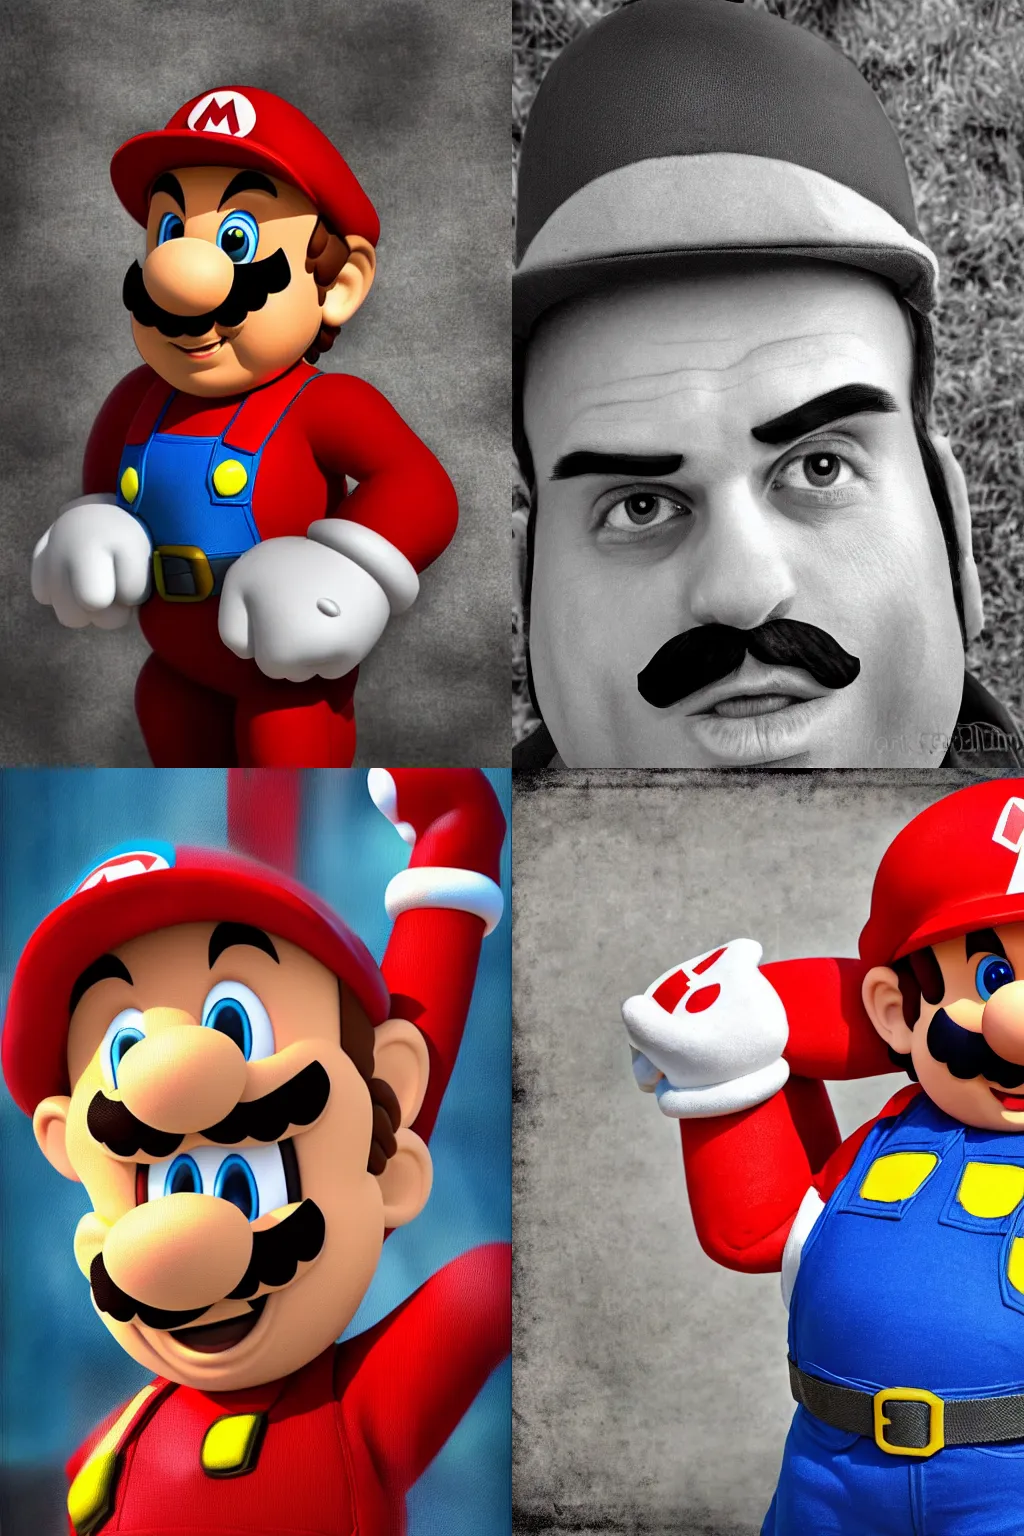 Prompt: John Barilaro as Super Mario, ultra realistic, high definition portrait photograph